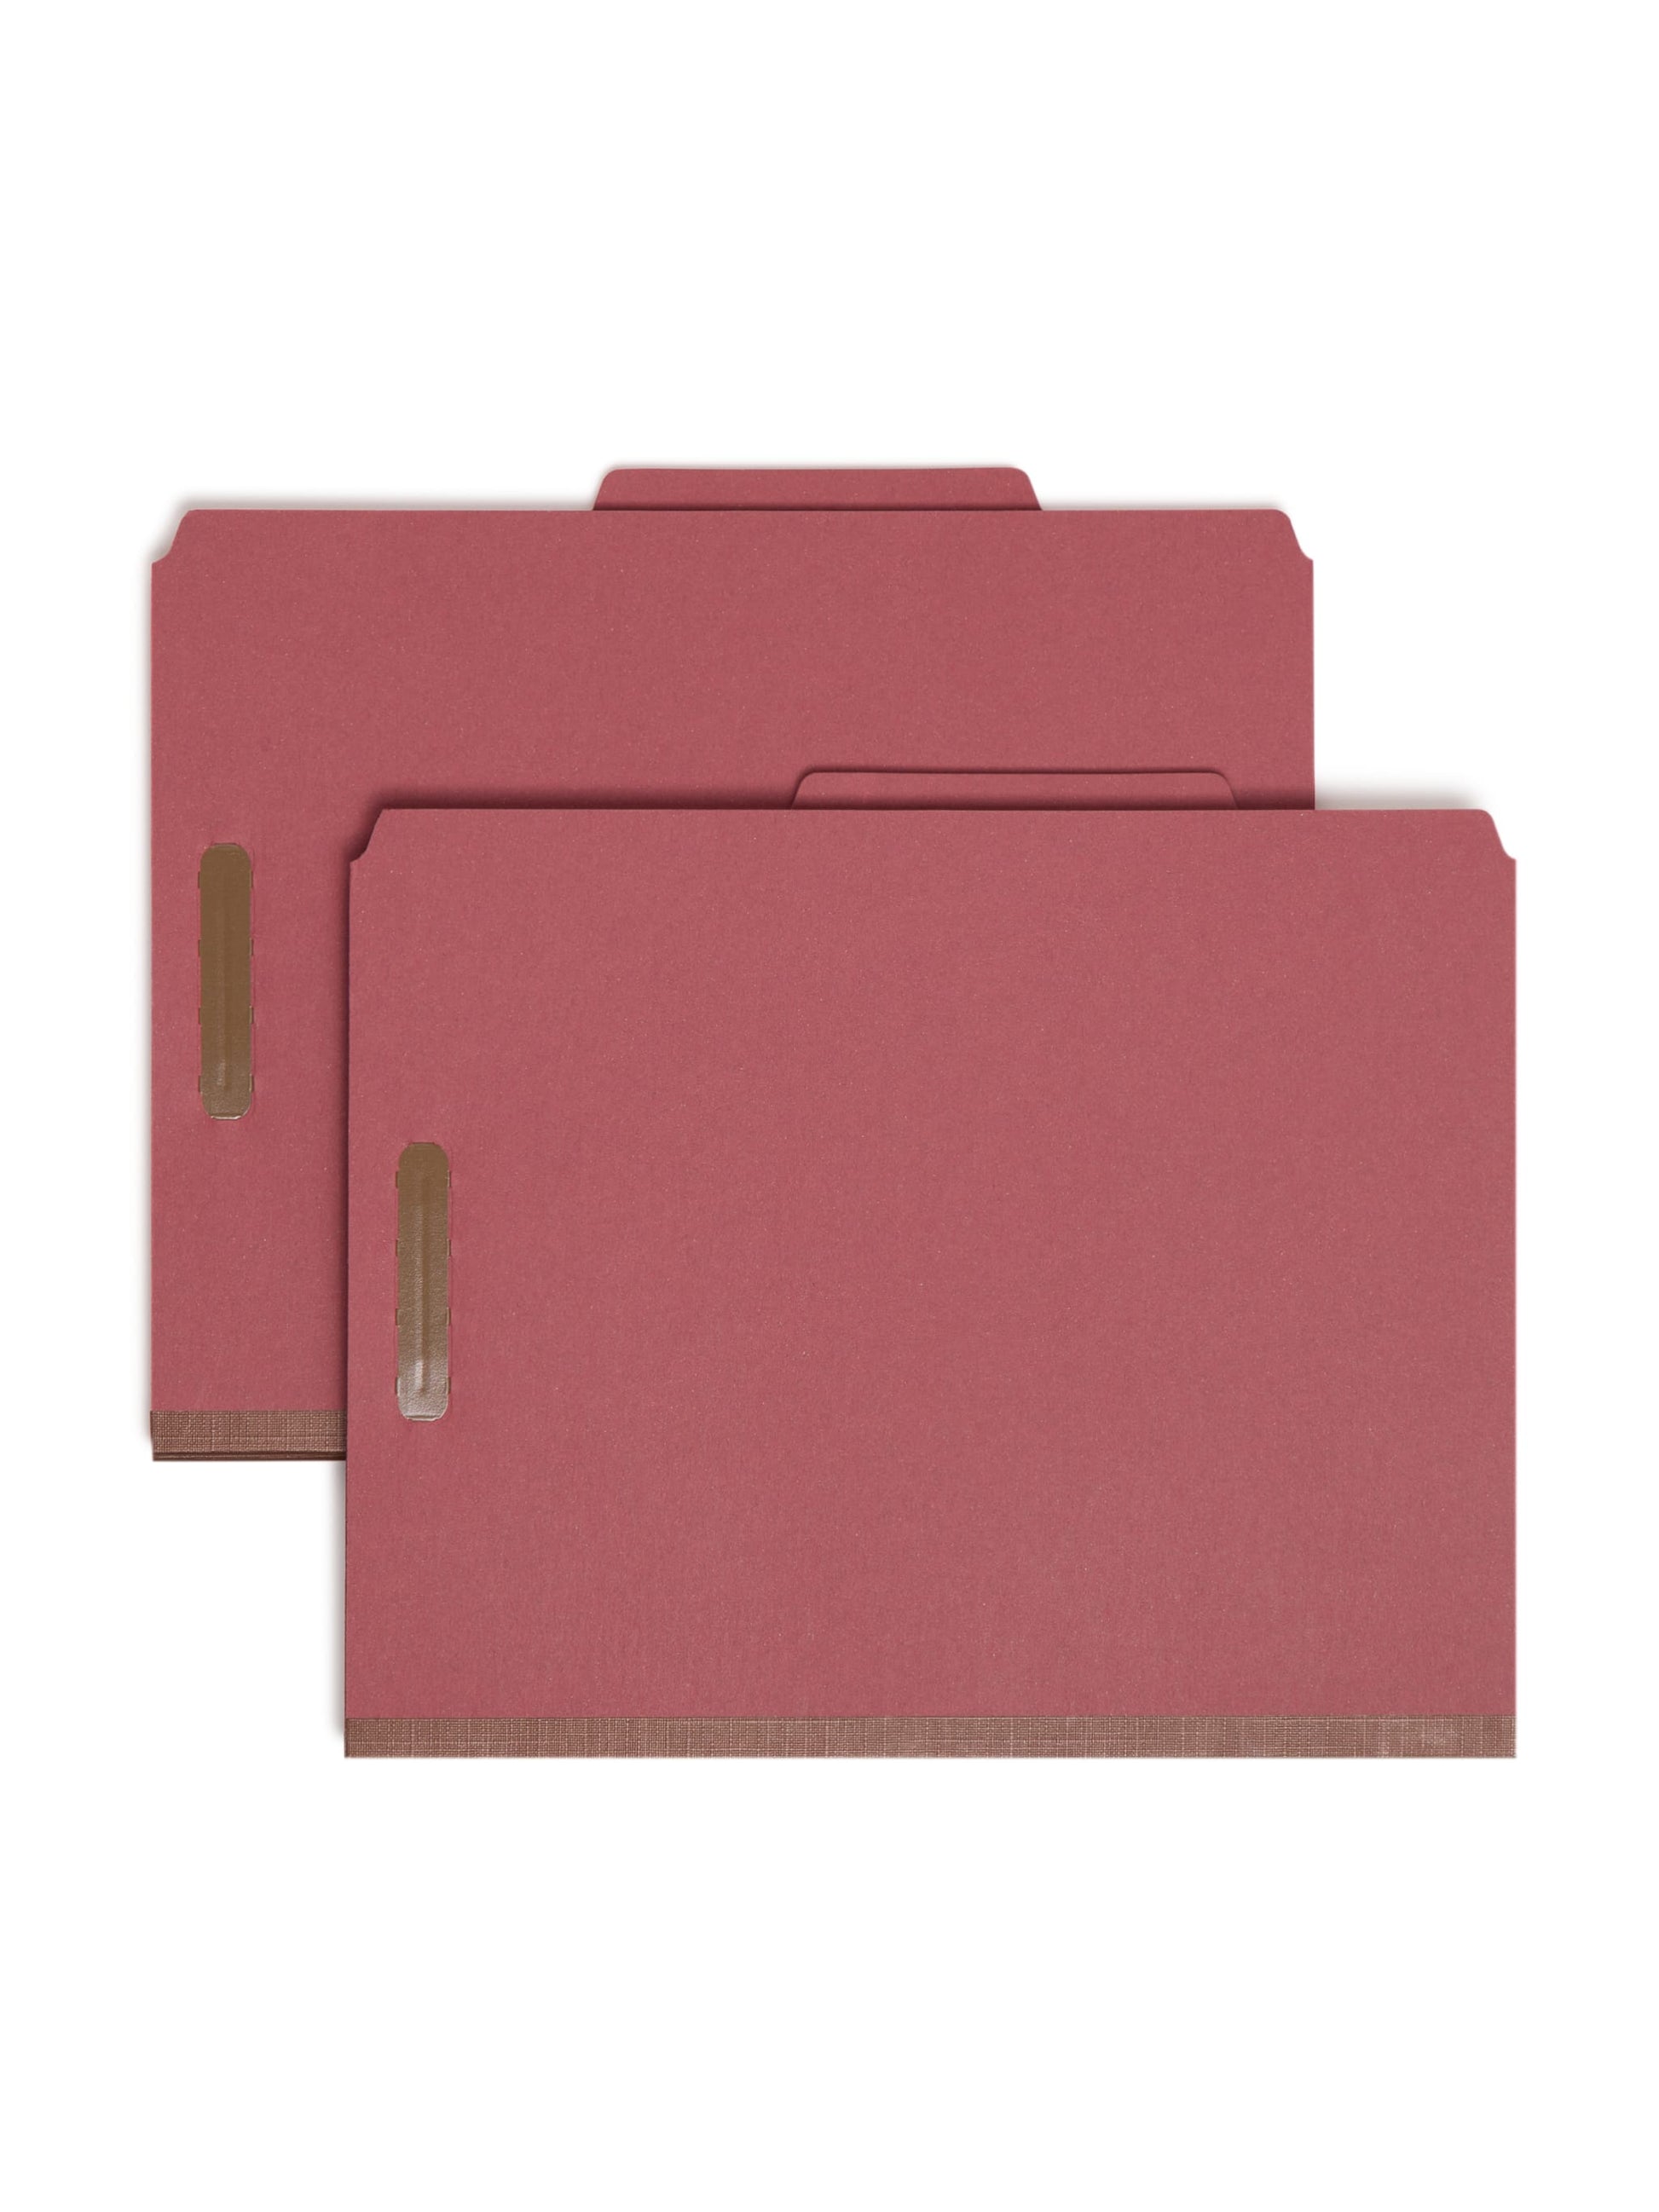 Pressboard Classification File Folders, 2 Dividers, 2 inch Expansion, Red Color, Letter Size, Set of 0, 30086486140240